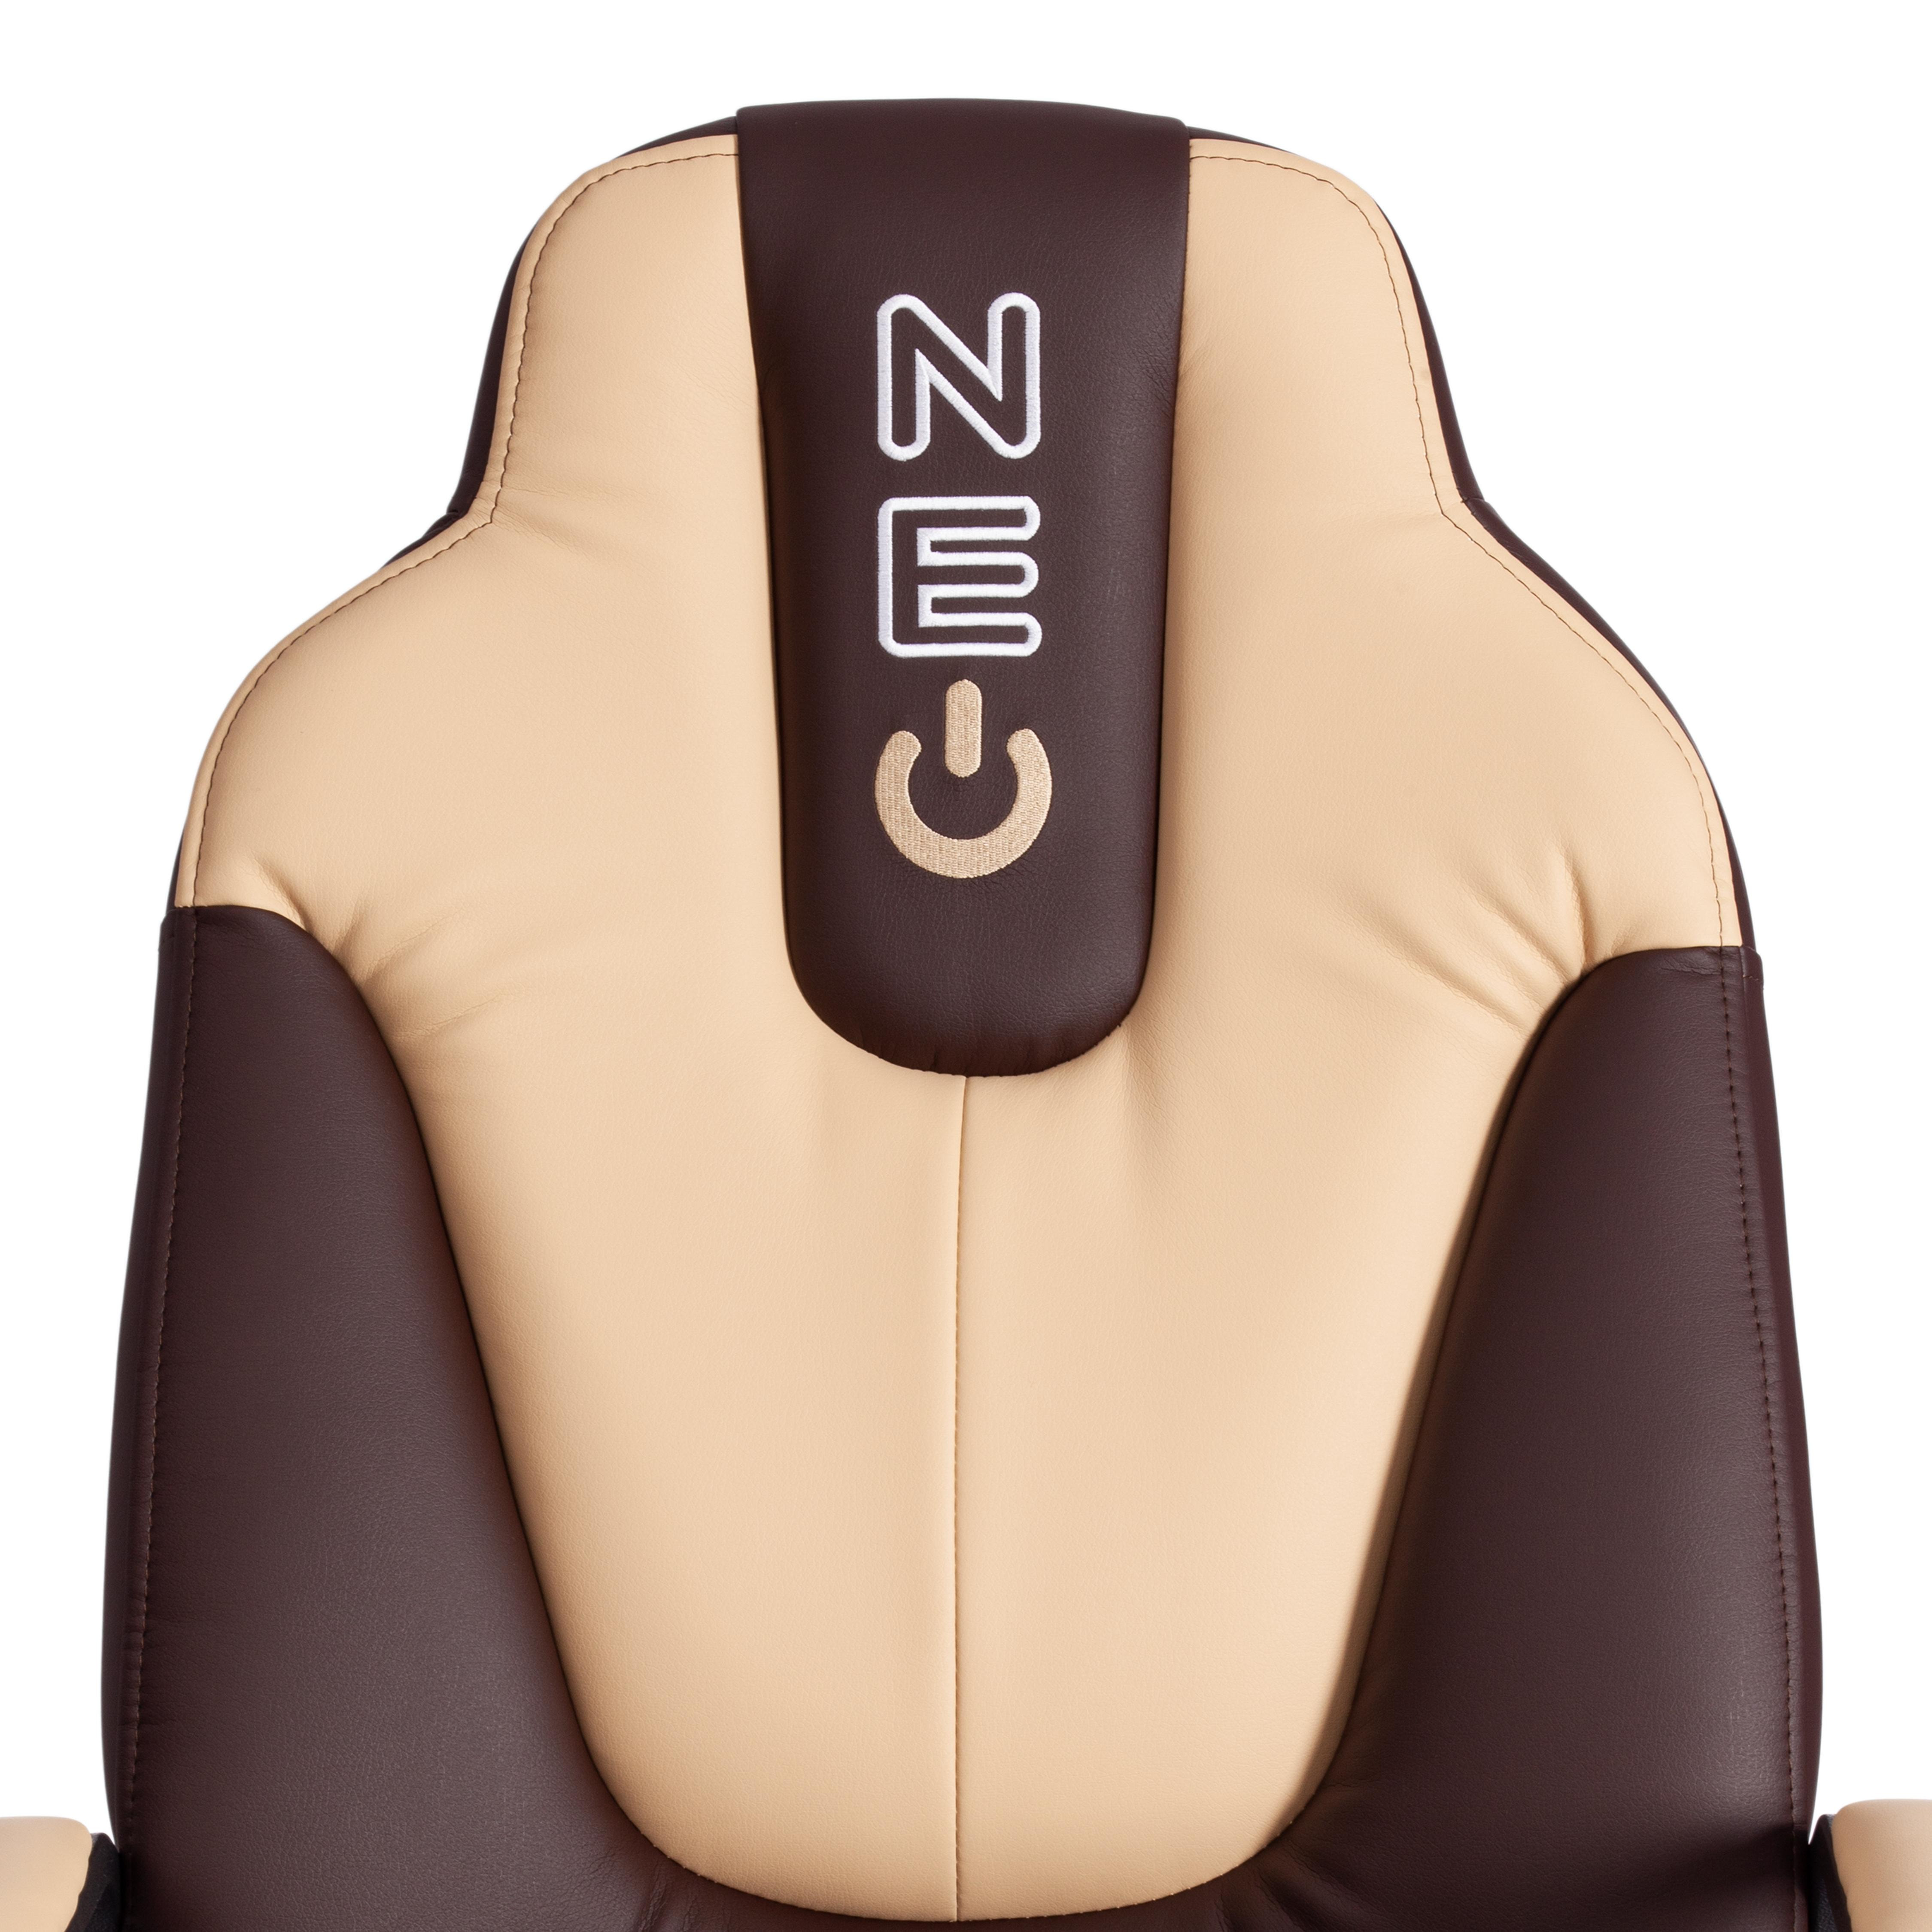 Кресло NEO 2 (22) кож/зам, коричневый/бежевый, 36-36/36-34